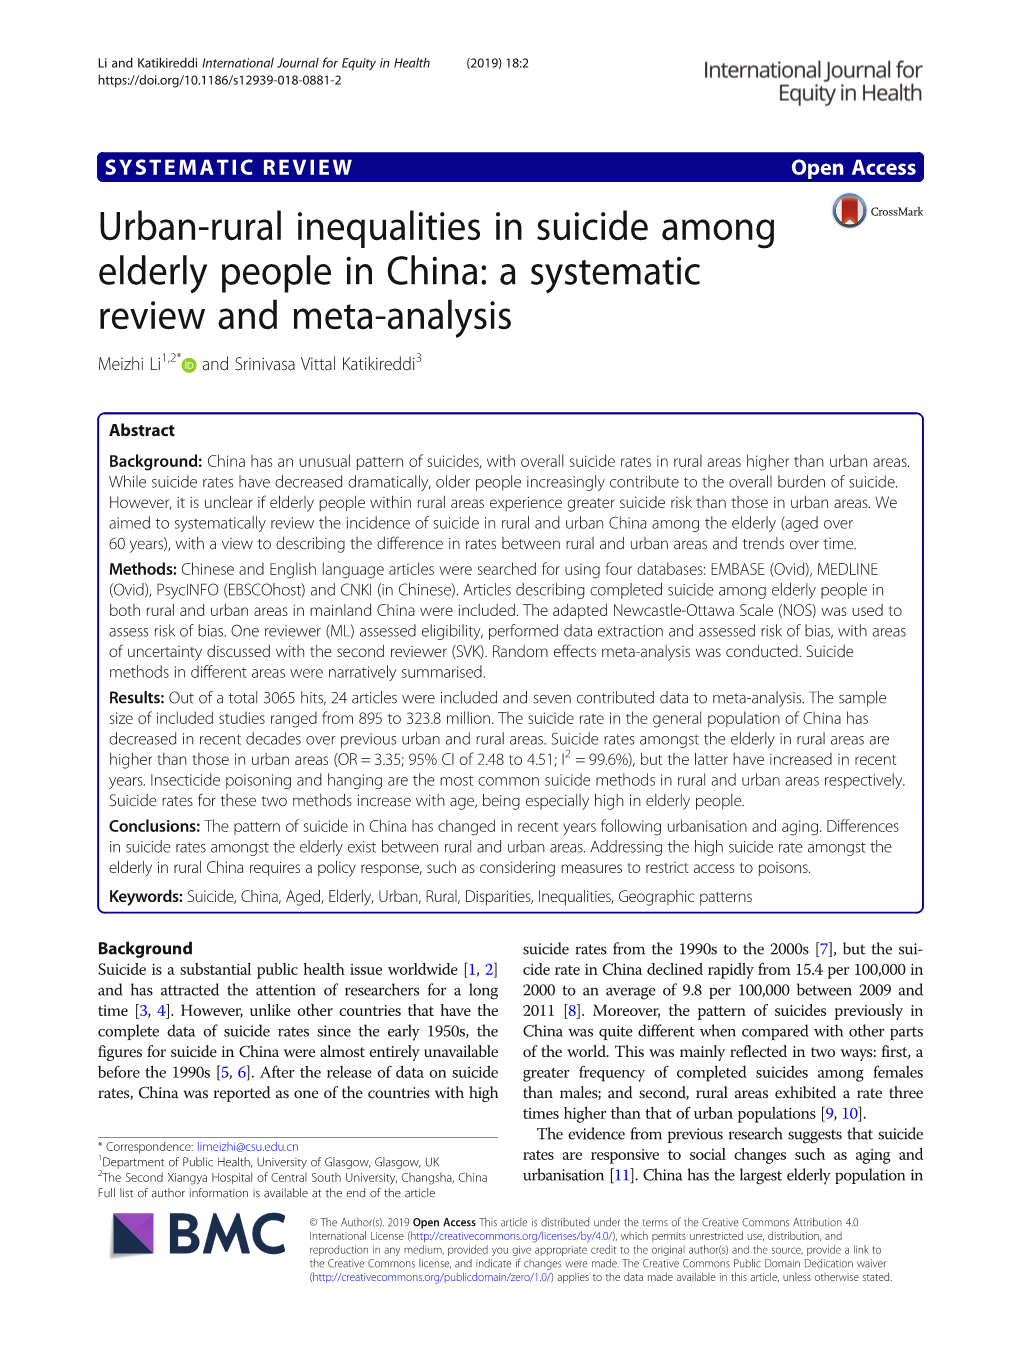 Urban-Rural Inequalities in Suicide Among Elderly People in China: a Systematic Review and Meta-Analysis Meizhi Li1,2* and Srinivasa Vittal Katikireddi3